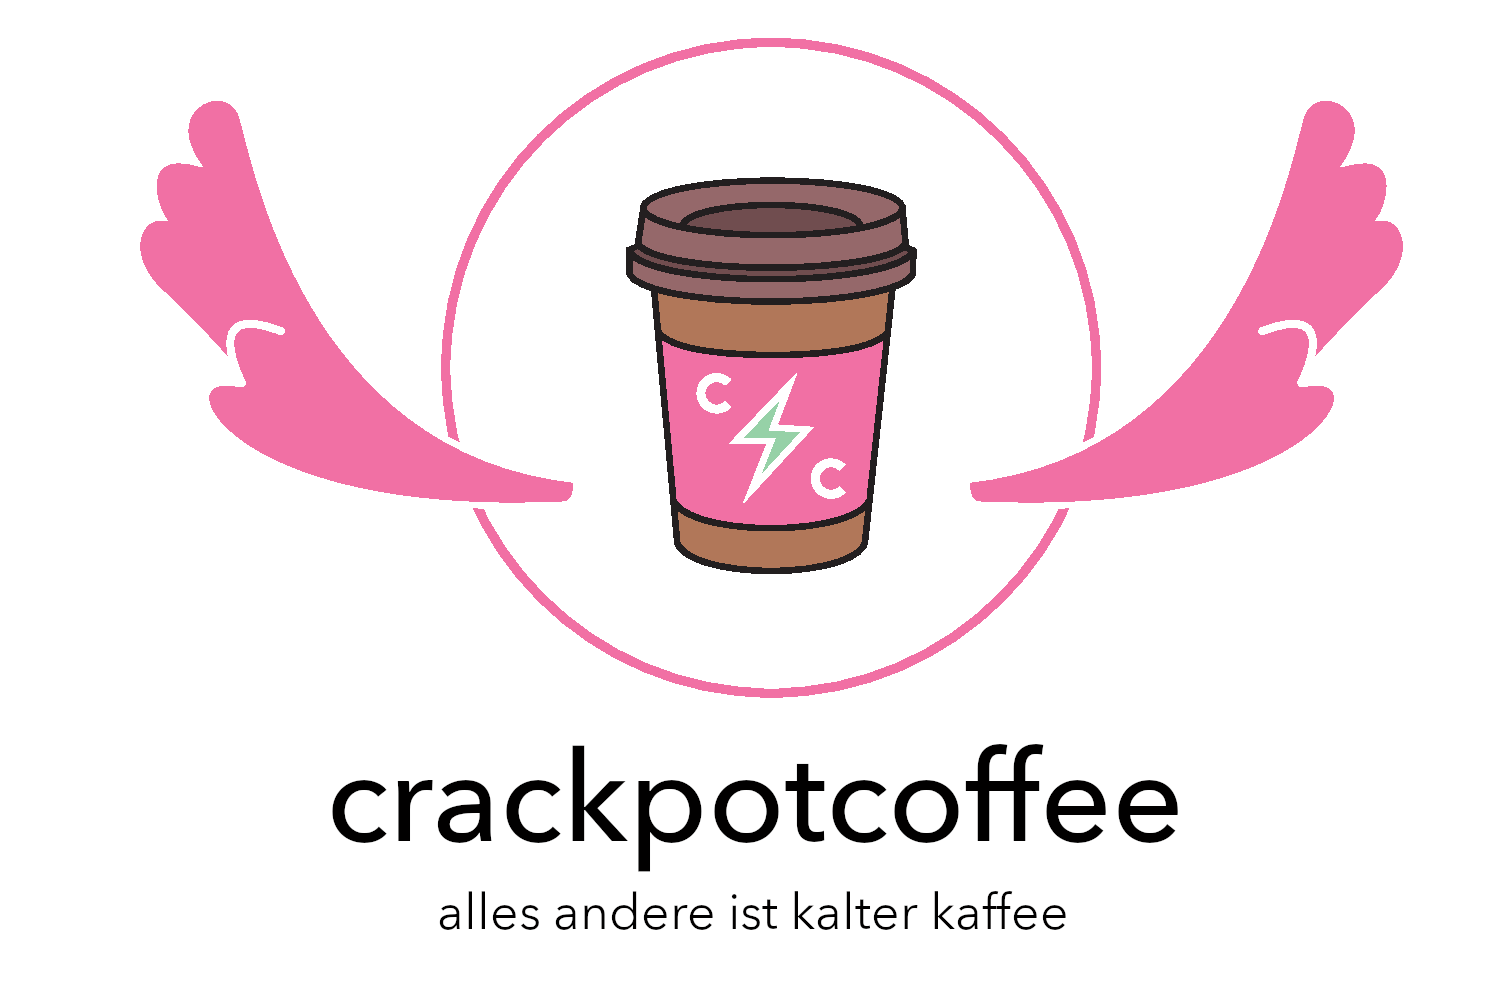 crackpotcoffee